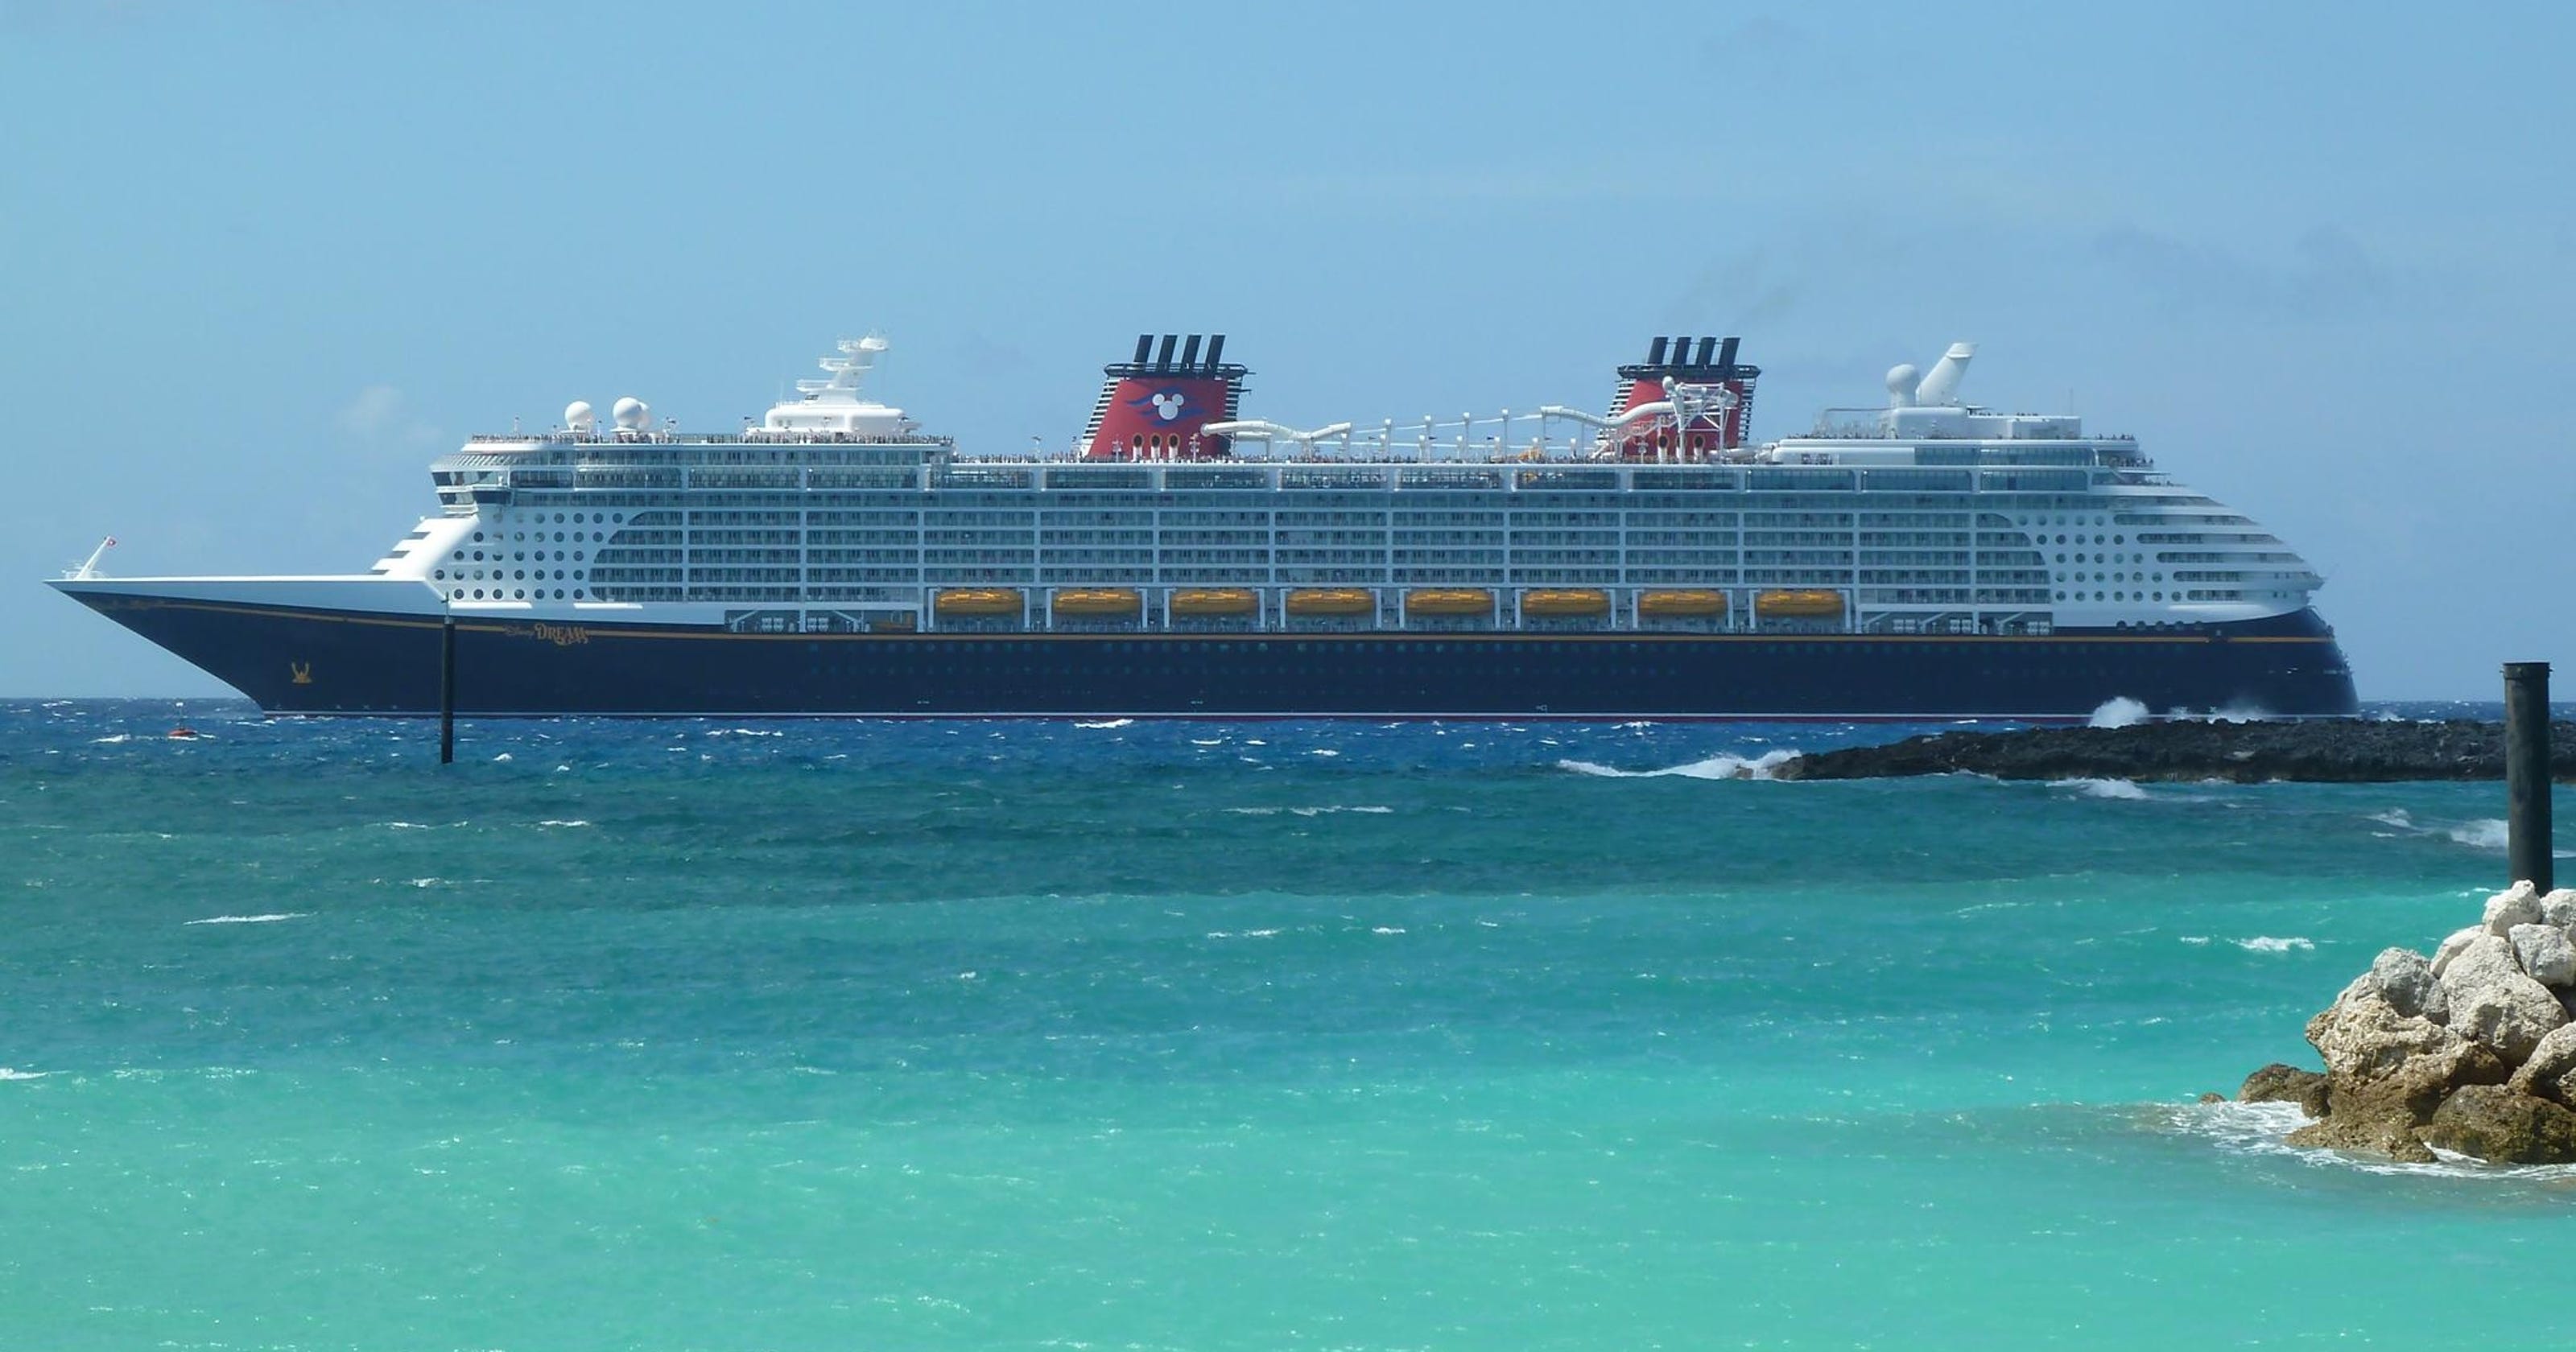 Cruise ship tours Disney Dream, Fantasy compared